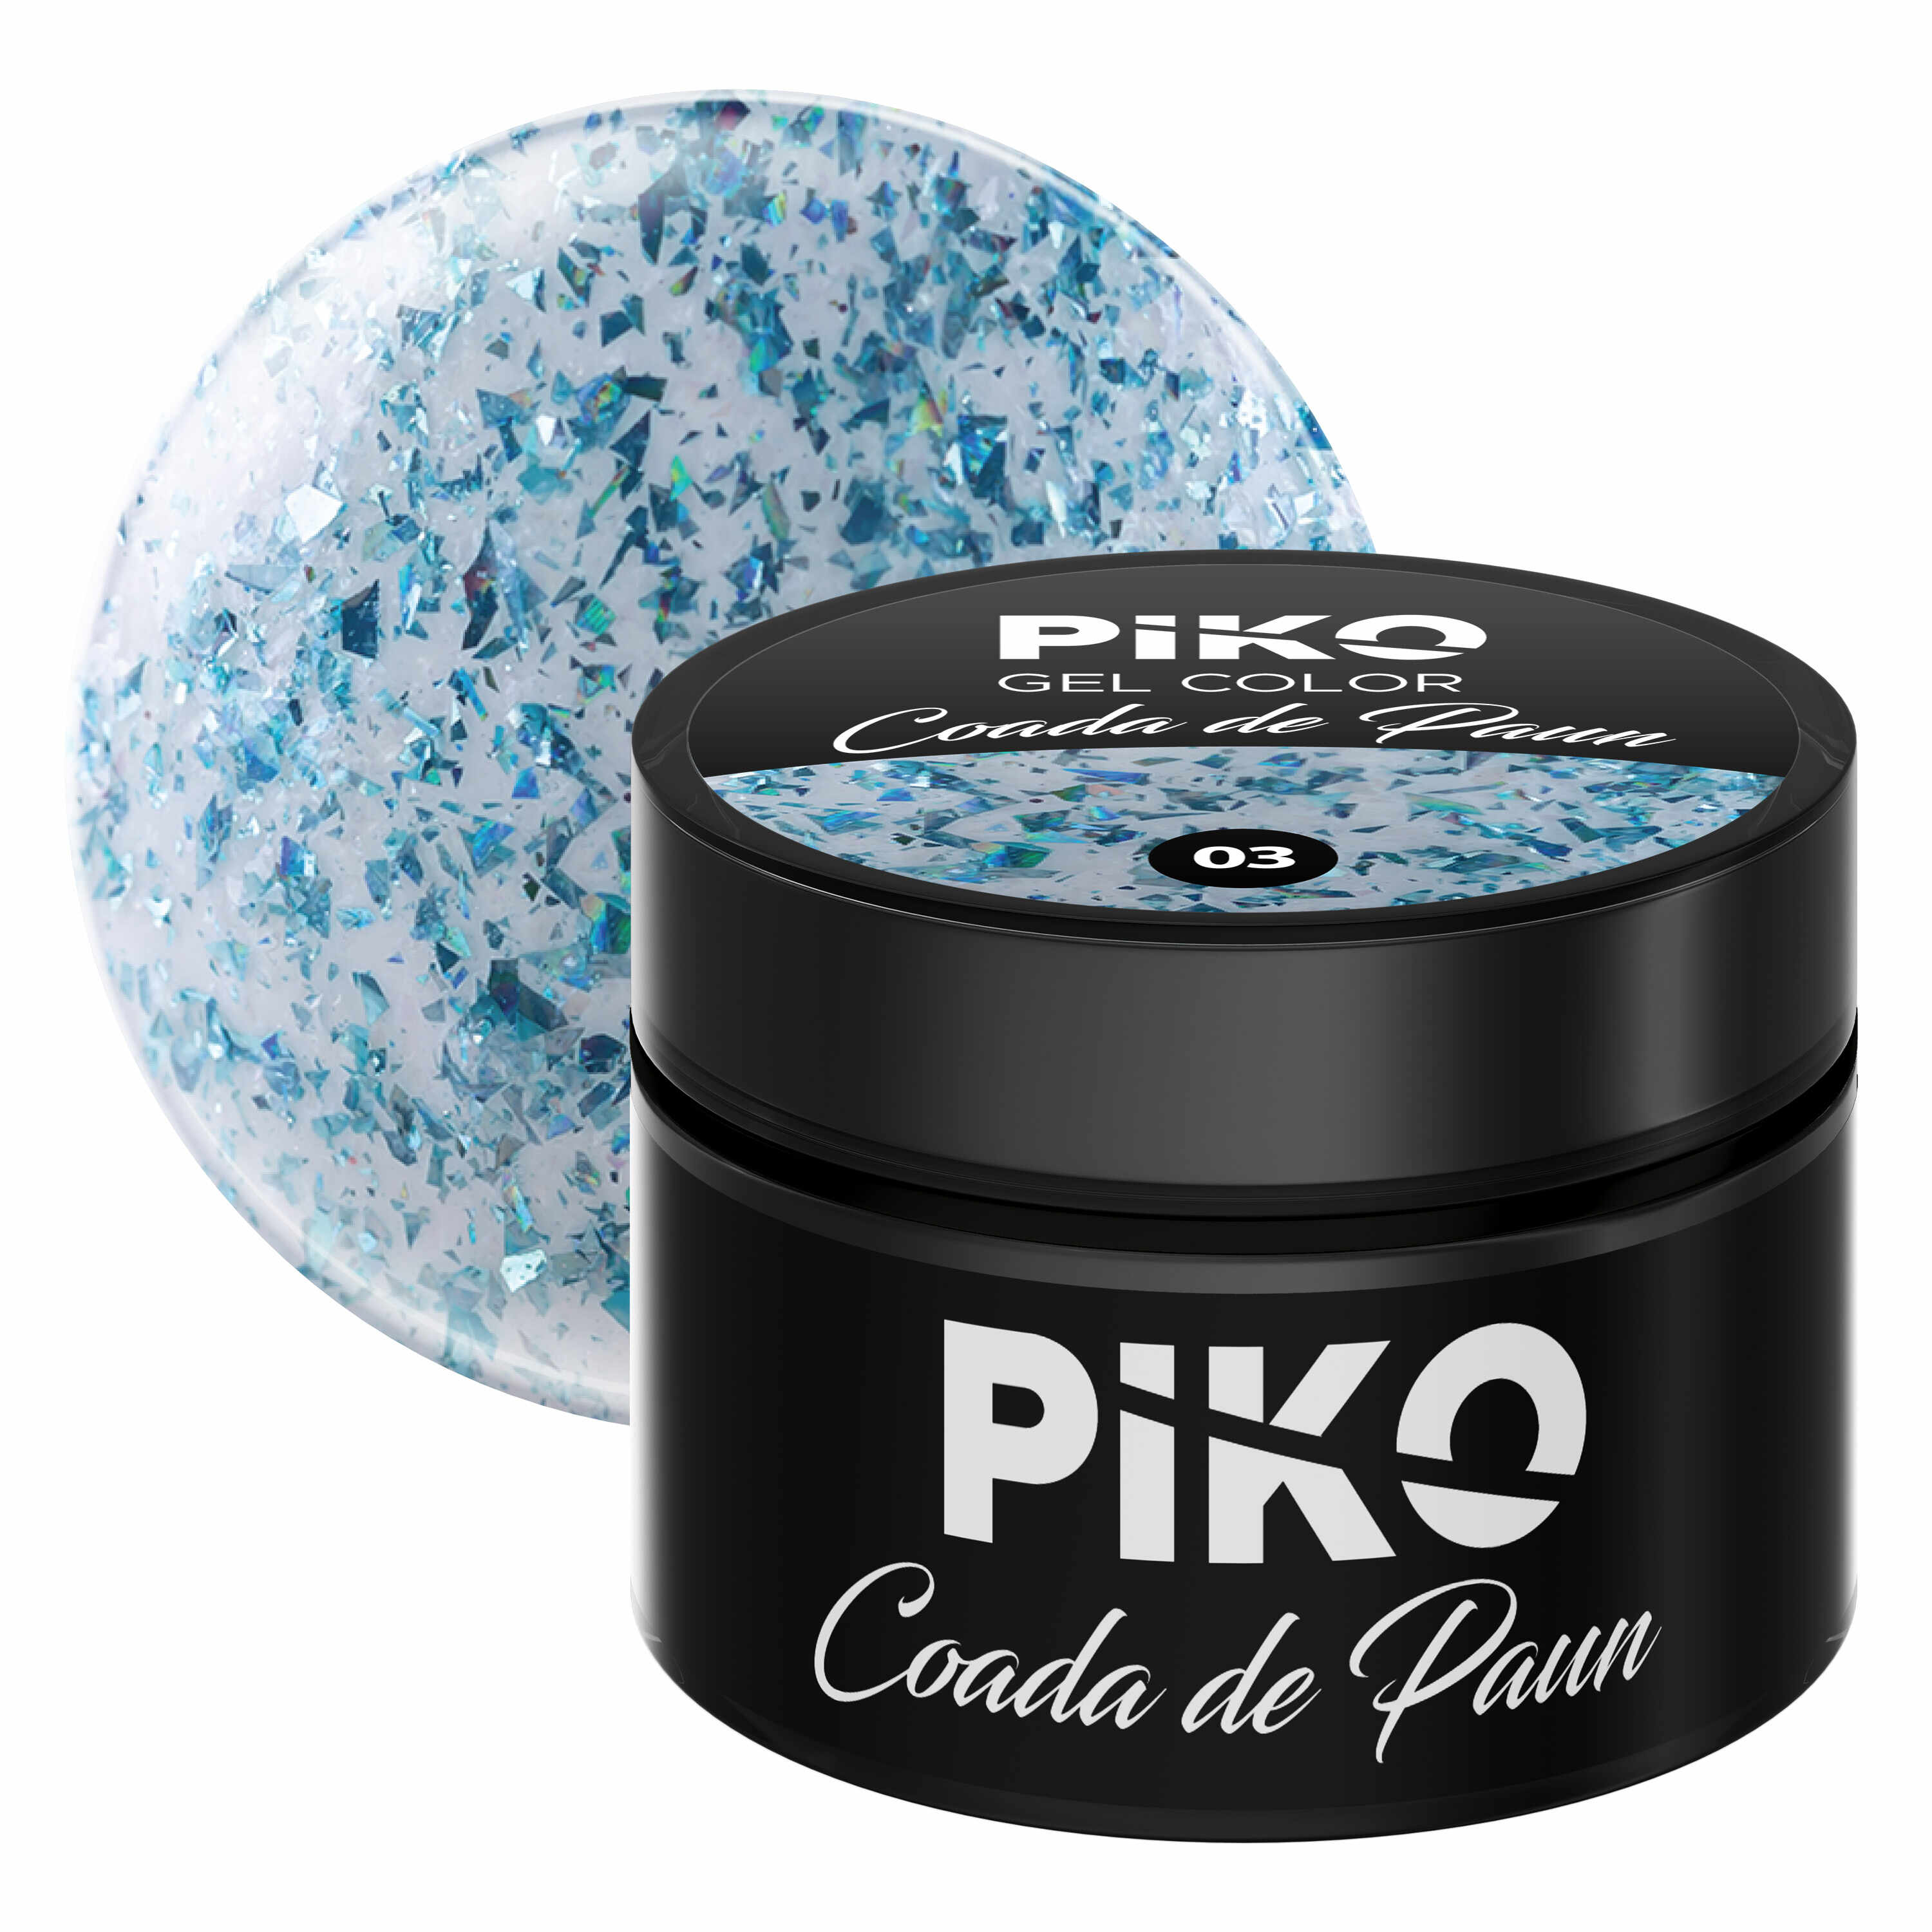 Gel UV color Piko, Coada de paun, 5g, model 03